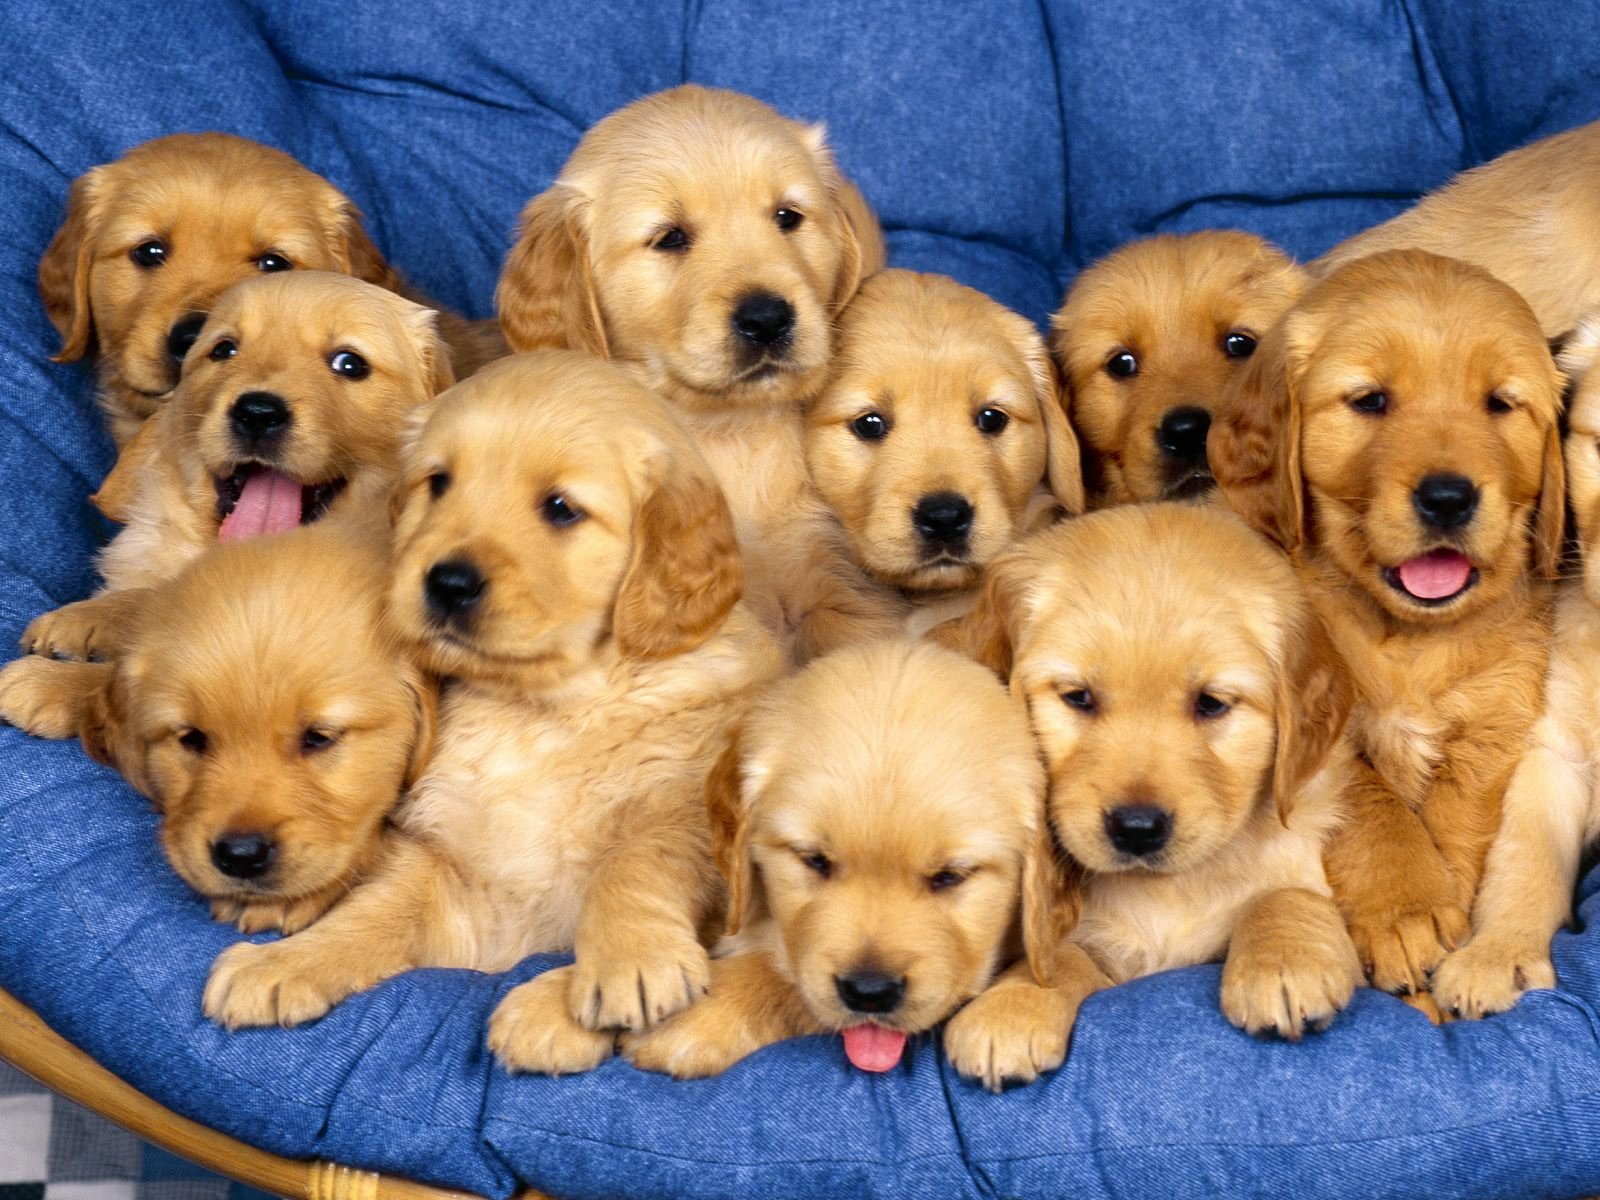 Dog Backgrounds for Desktop Fresh Puppy Dogs Hd Desktop Wallpapers